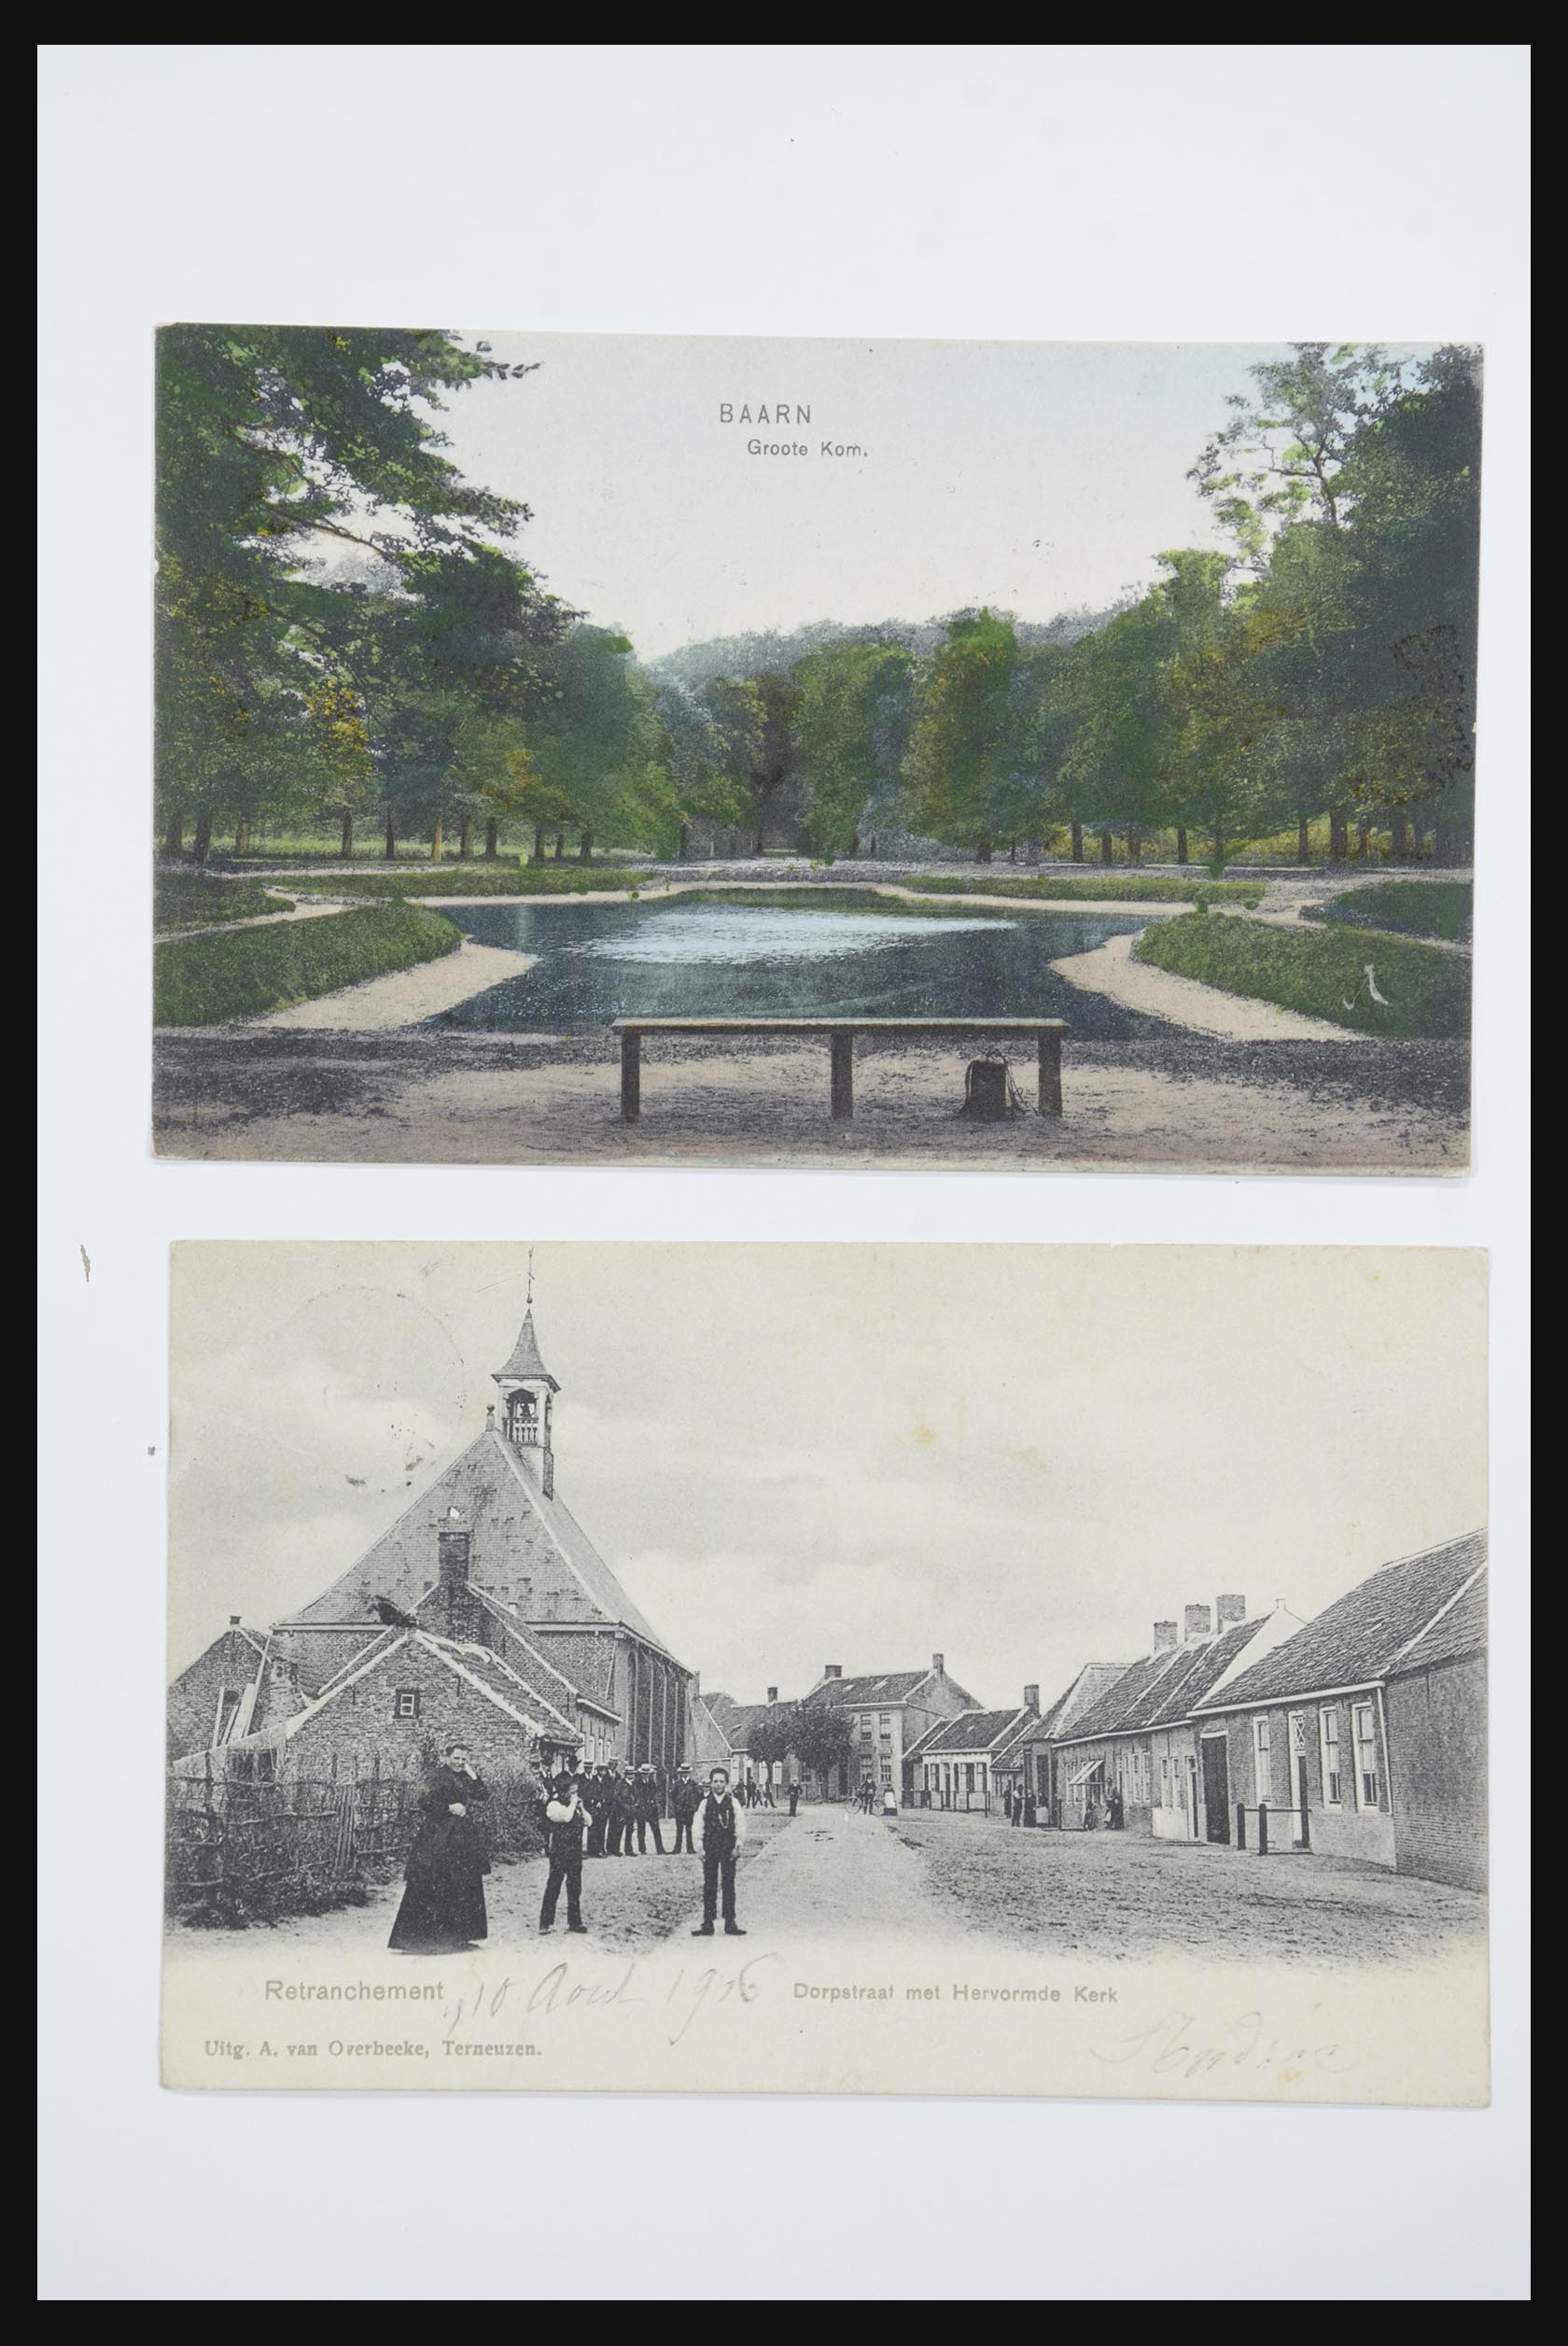 31668 060 - 31668 Netherlands picture postcards 1905-1935.